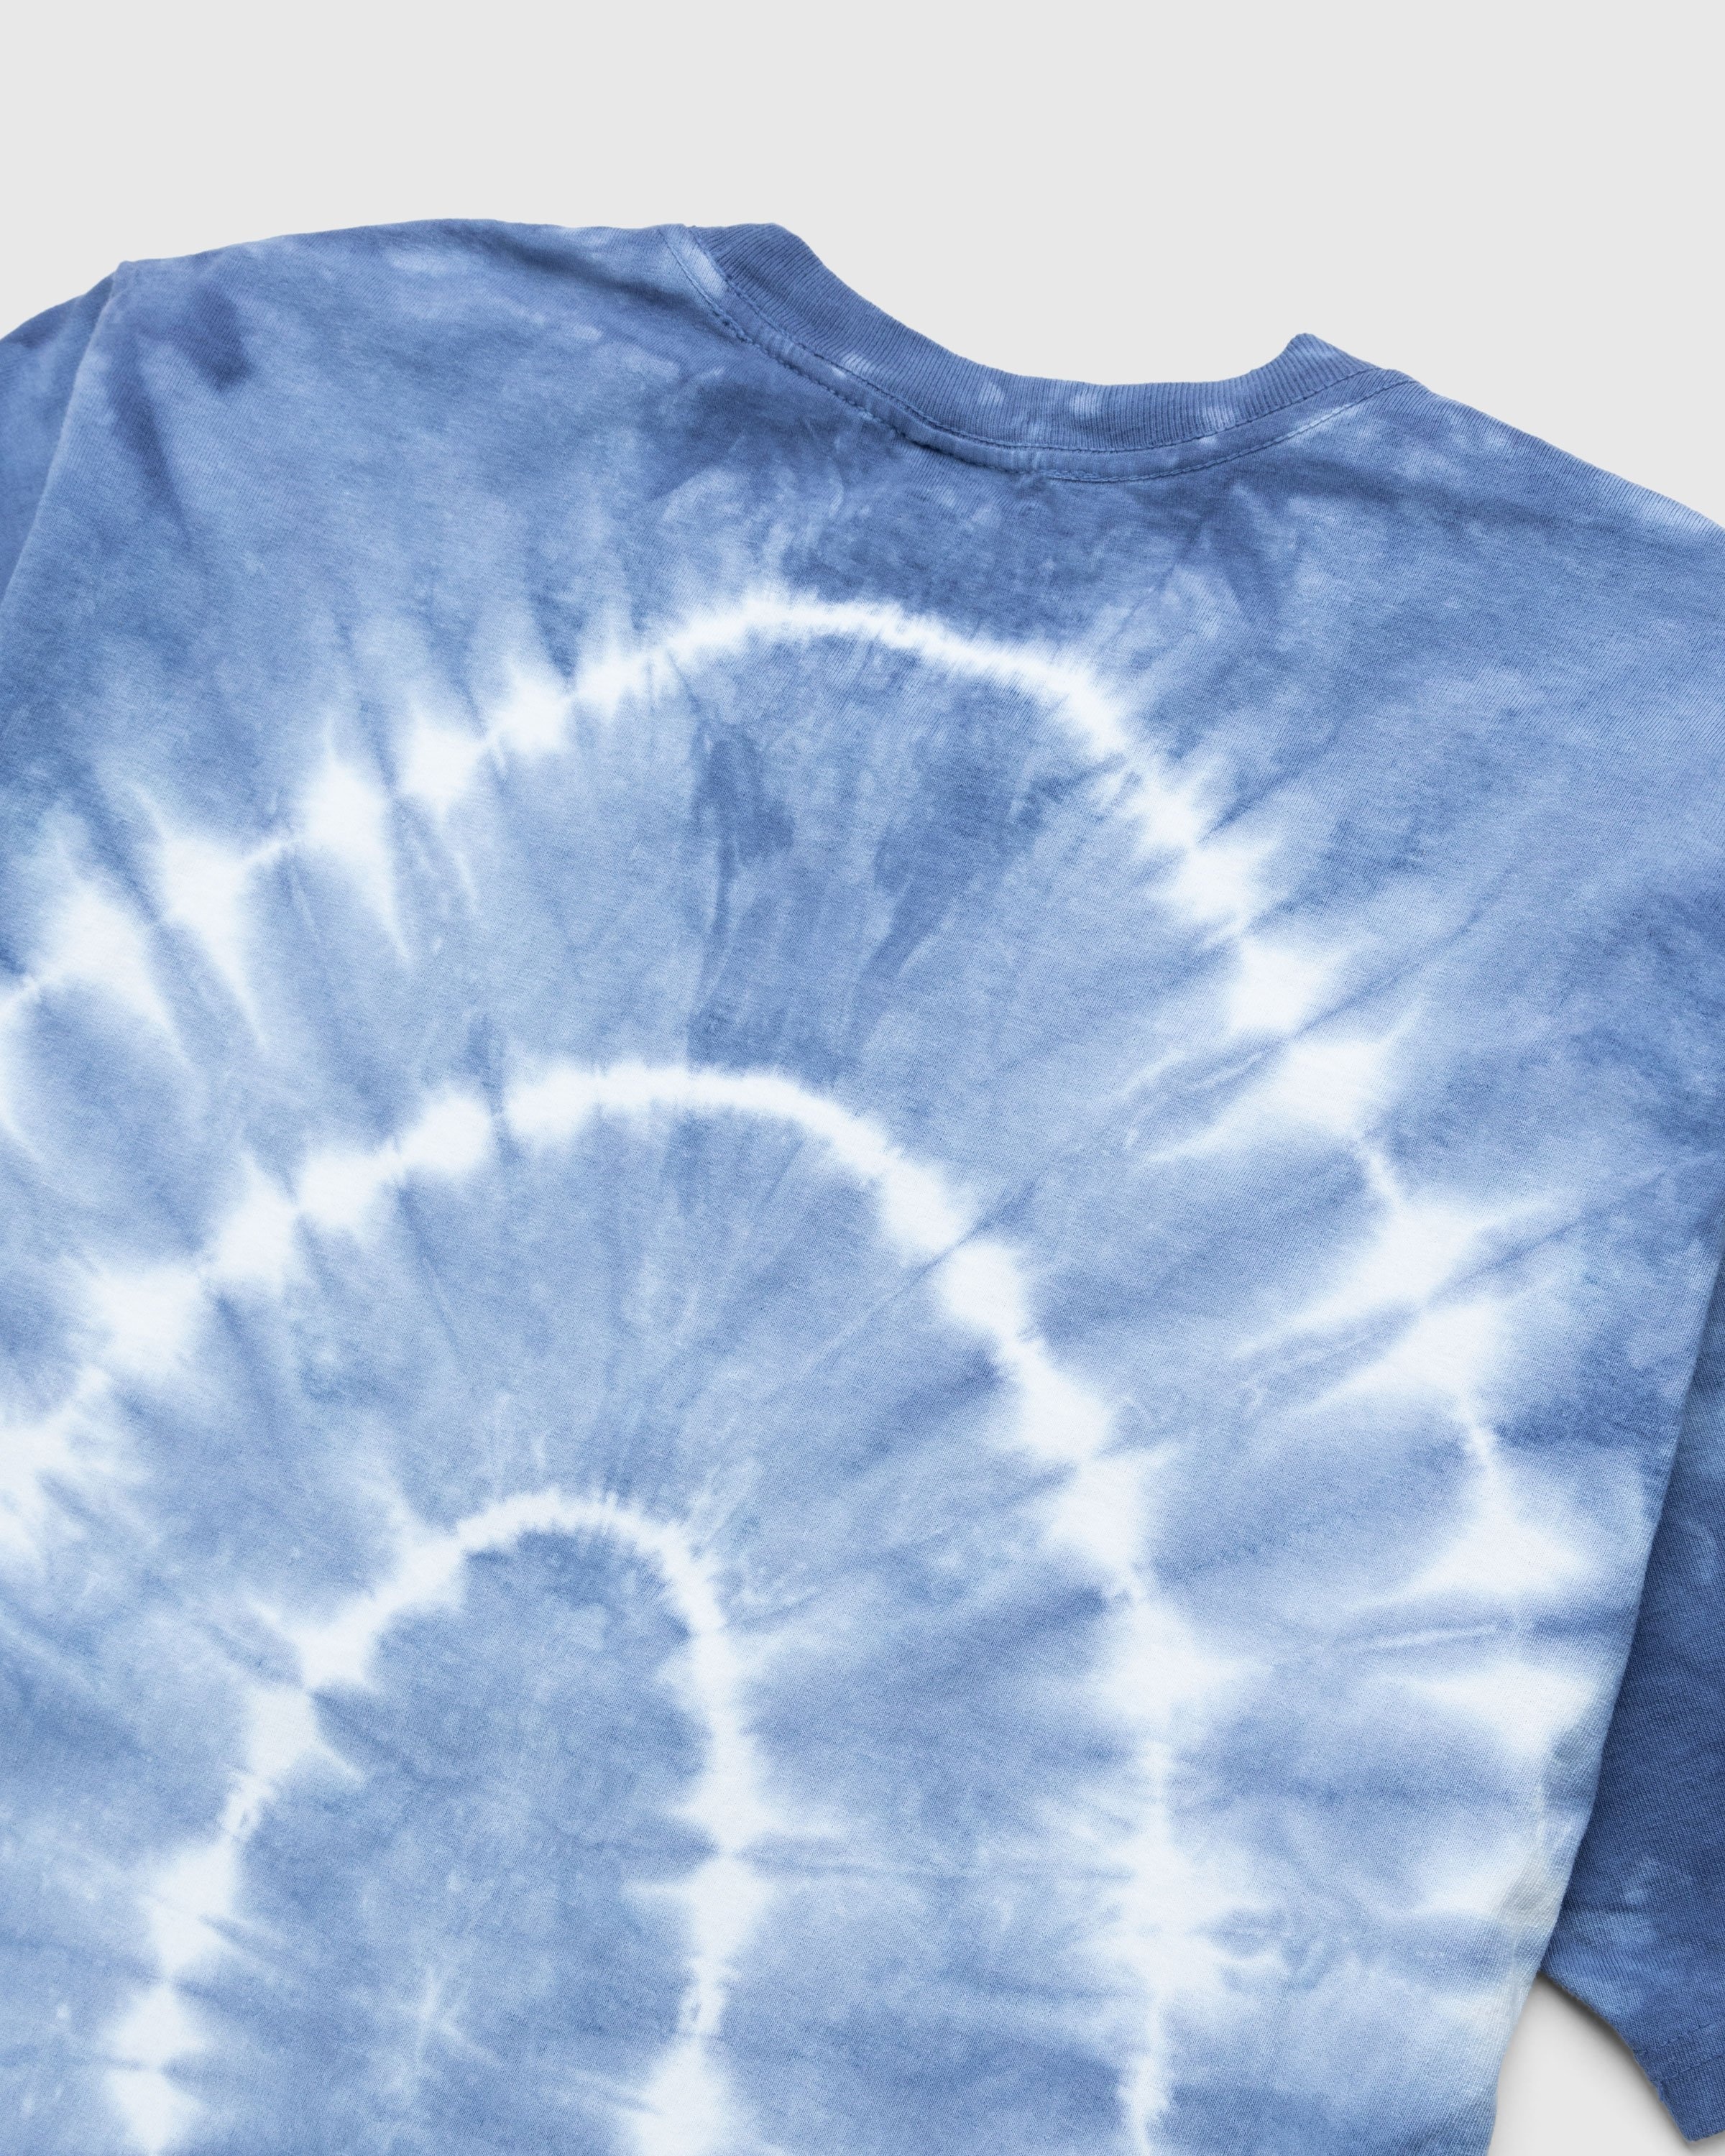 Stüssy x Dries van Noten – Tie-Dye Tee - T-shirts - Blue - Image 4